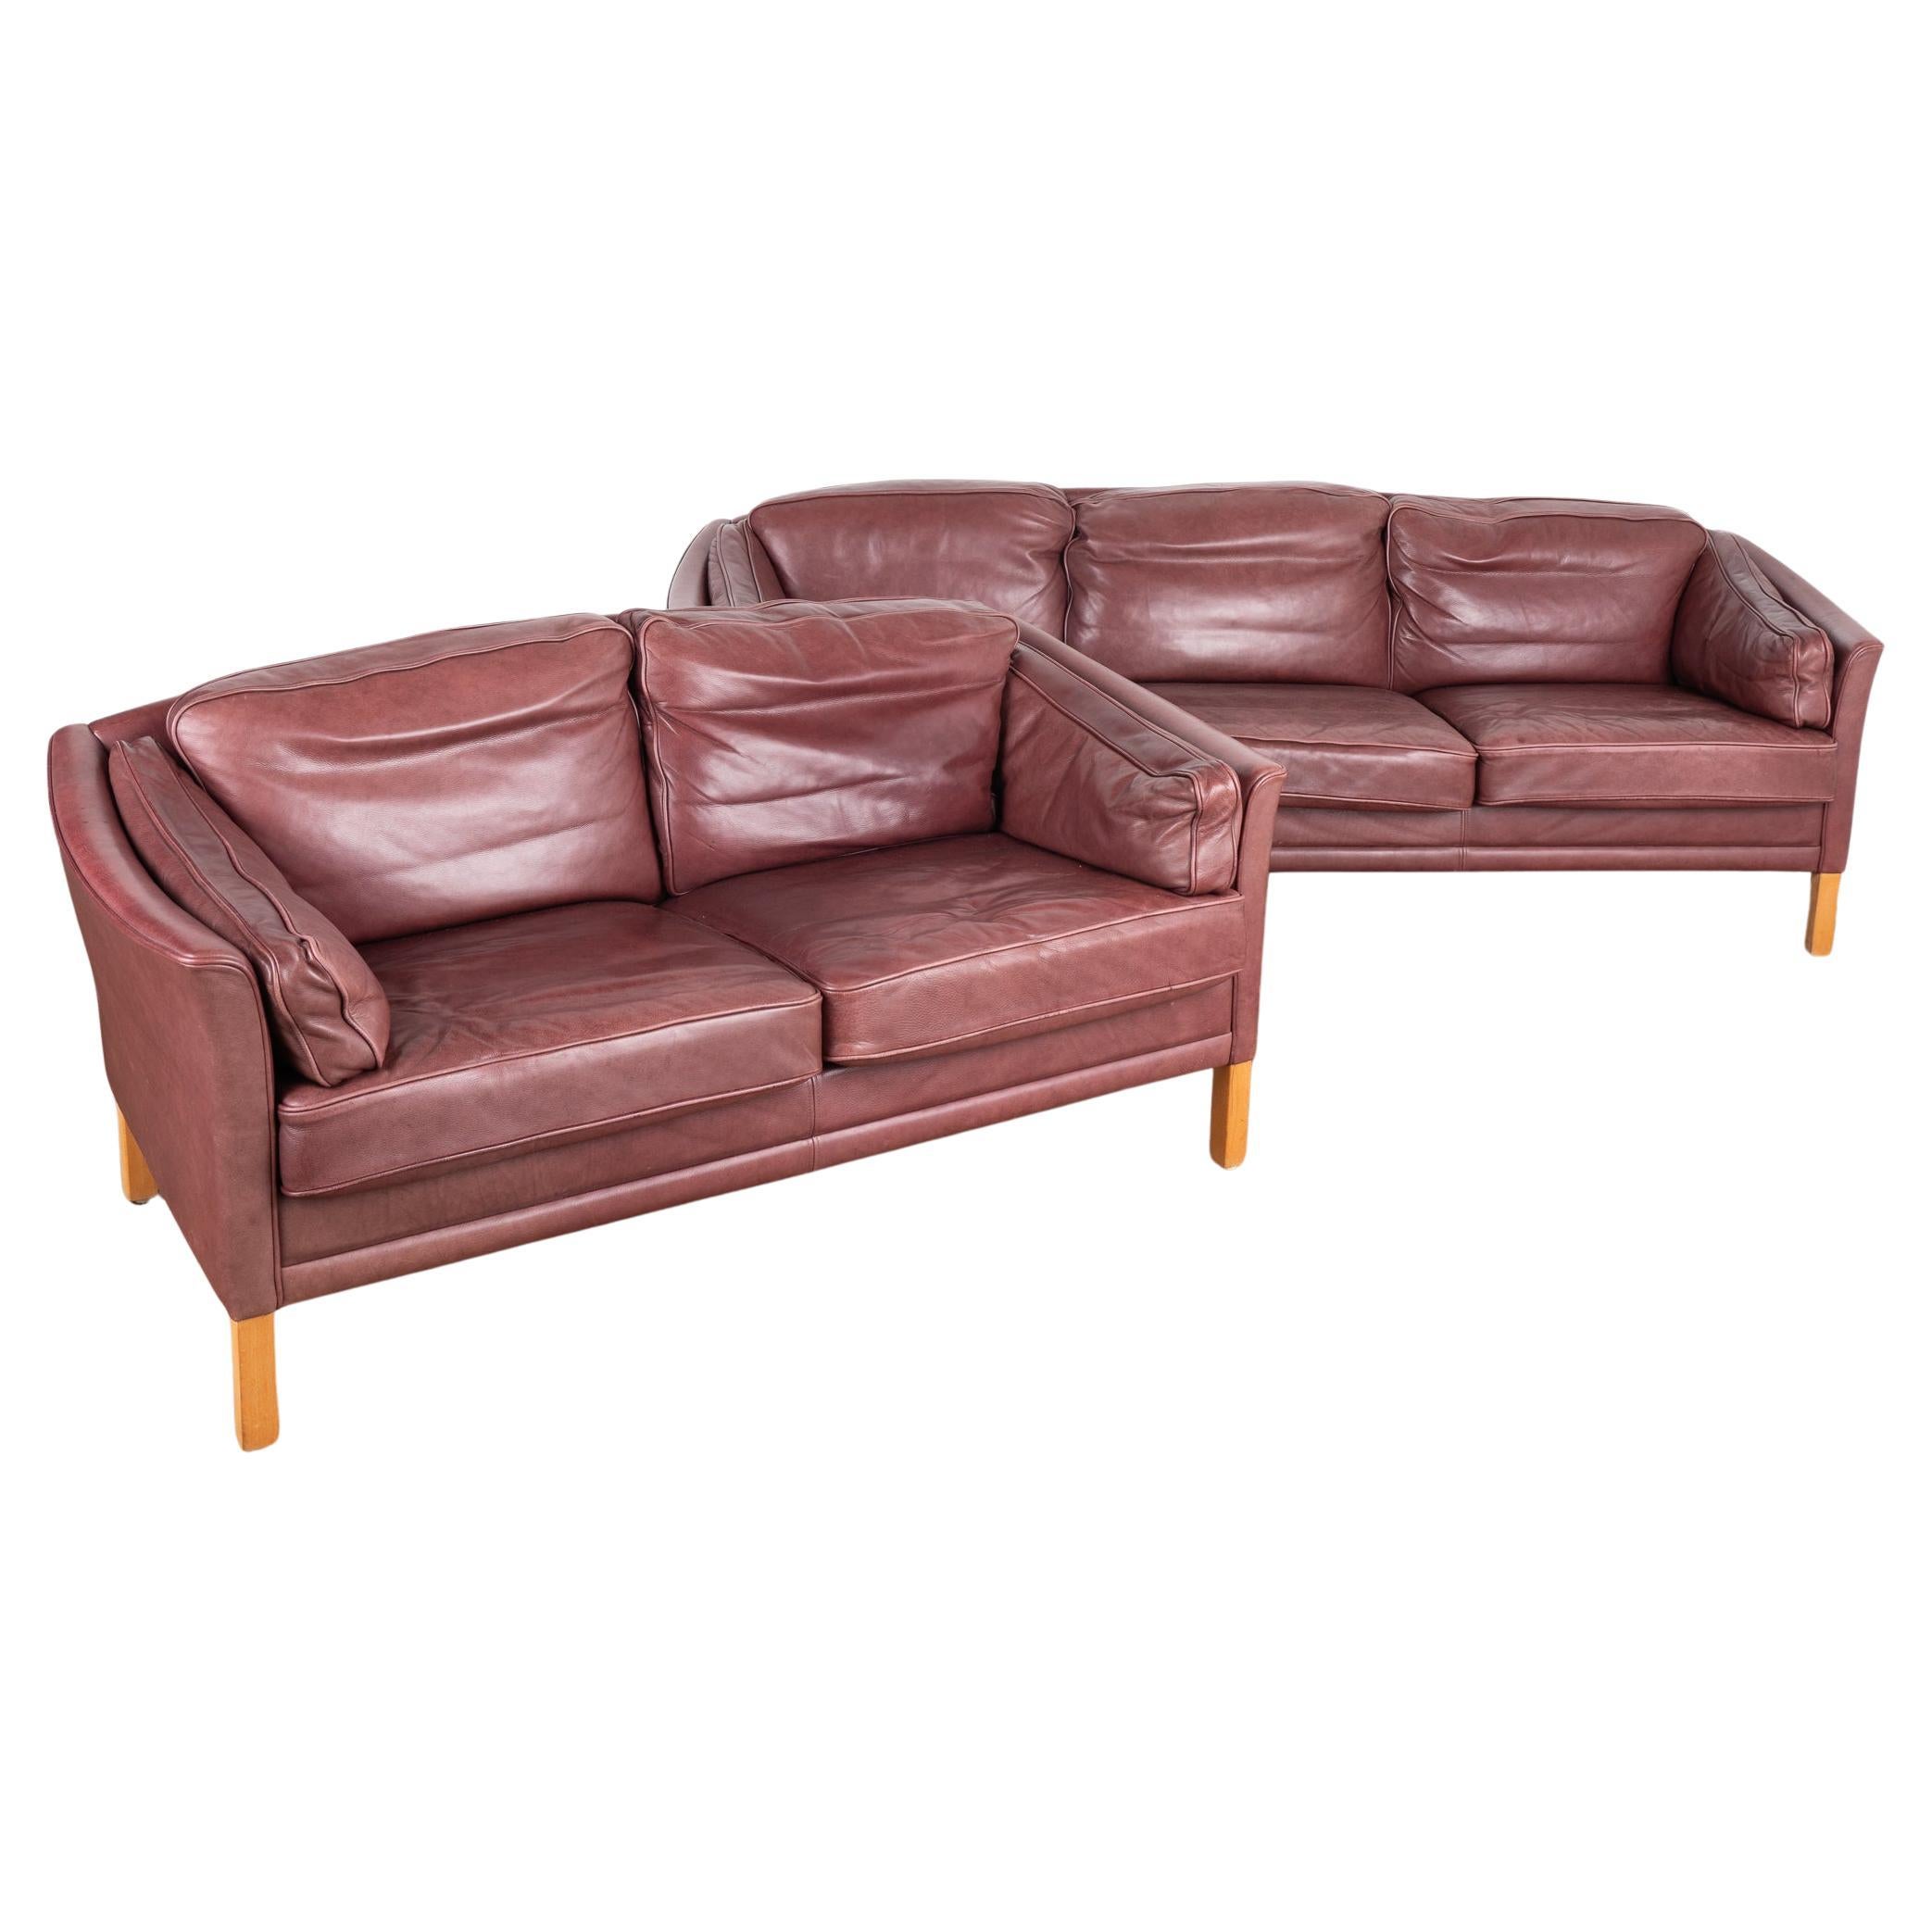 Set of Mid Century Purple Leather 3 Seat Sofa & 2 Seat Loveseat, Denmark 1960-70 For Sale